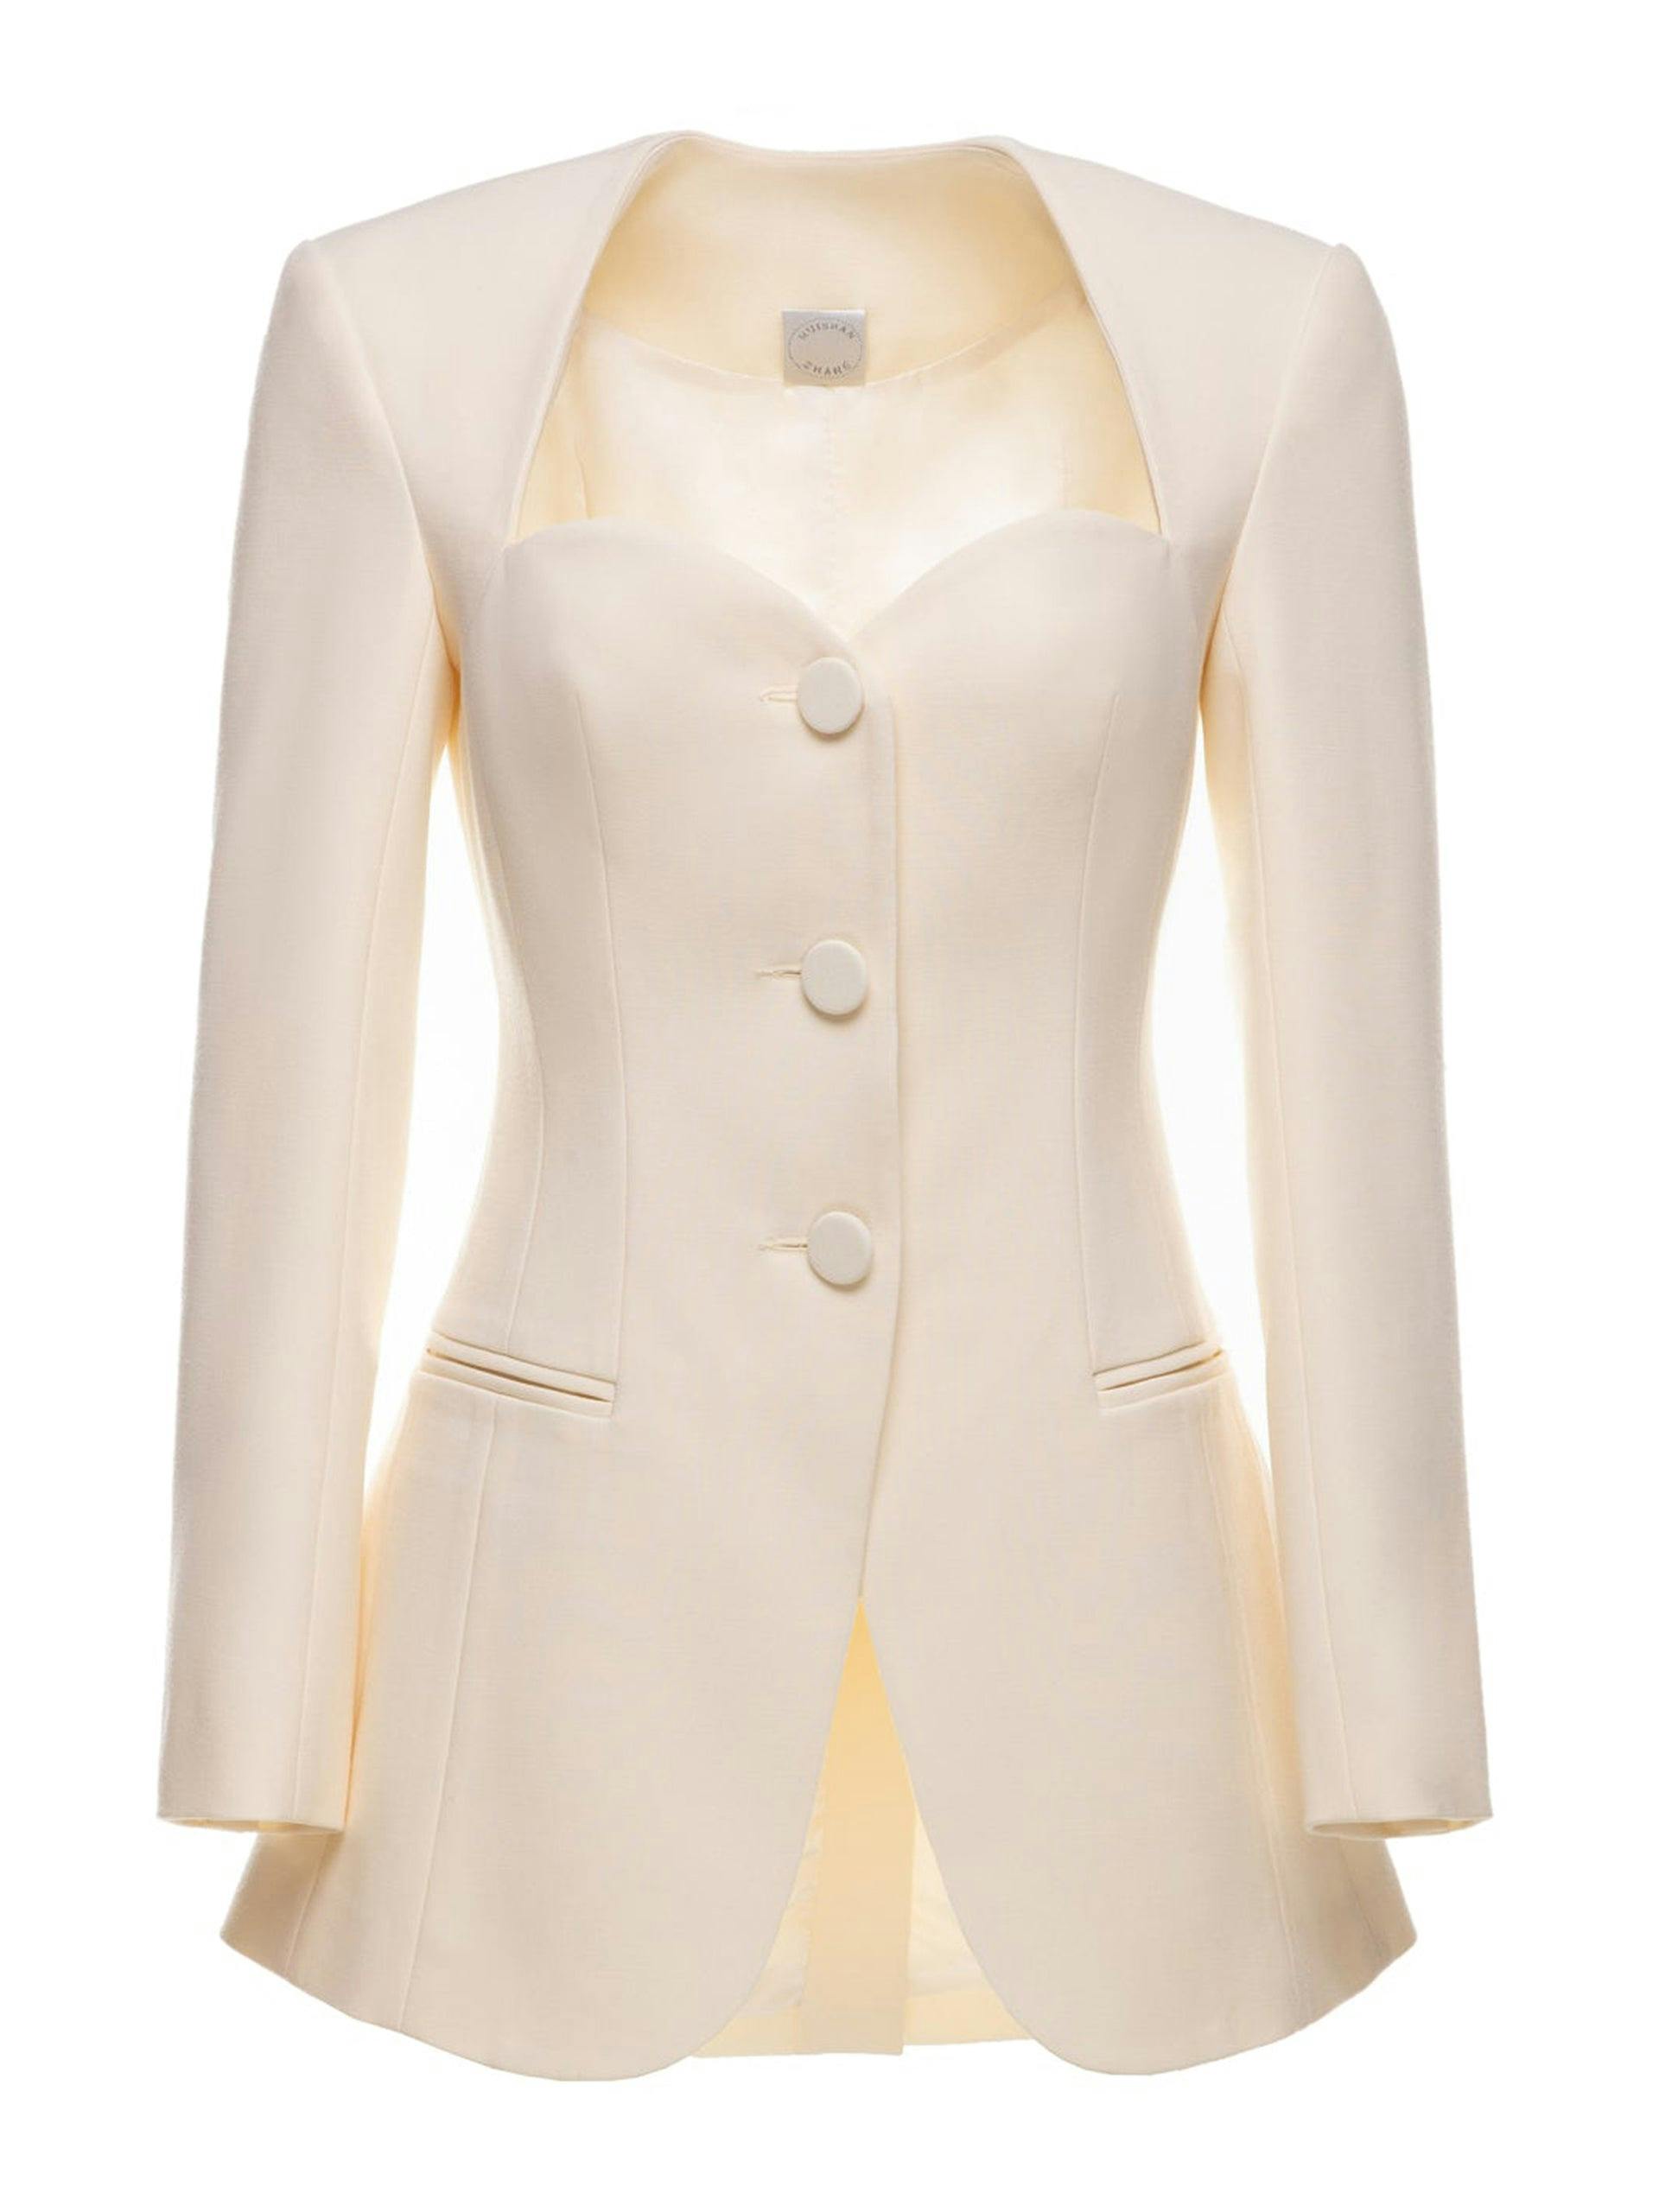 Kim antique white crepe jacket